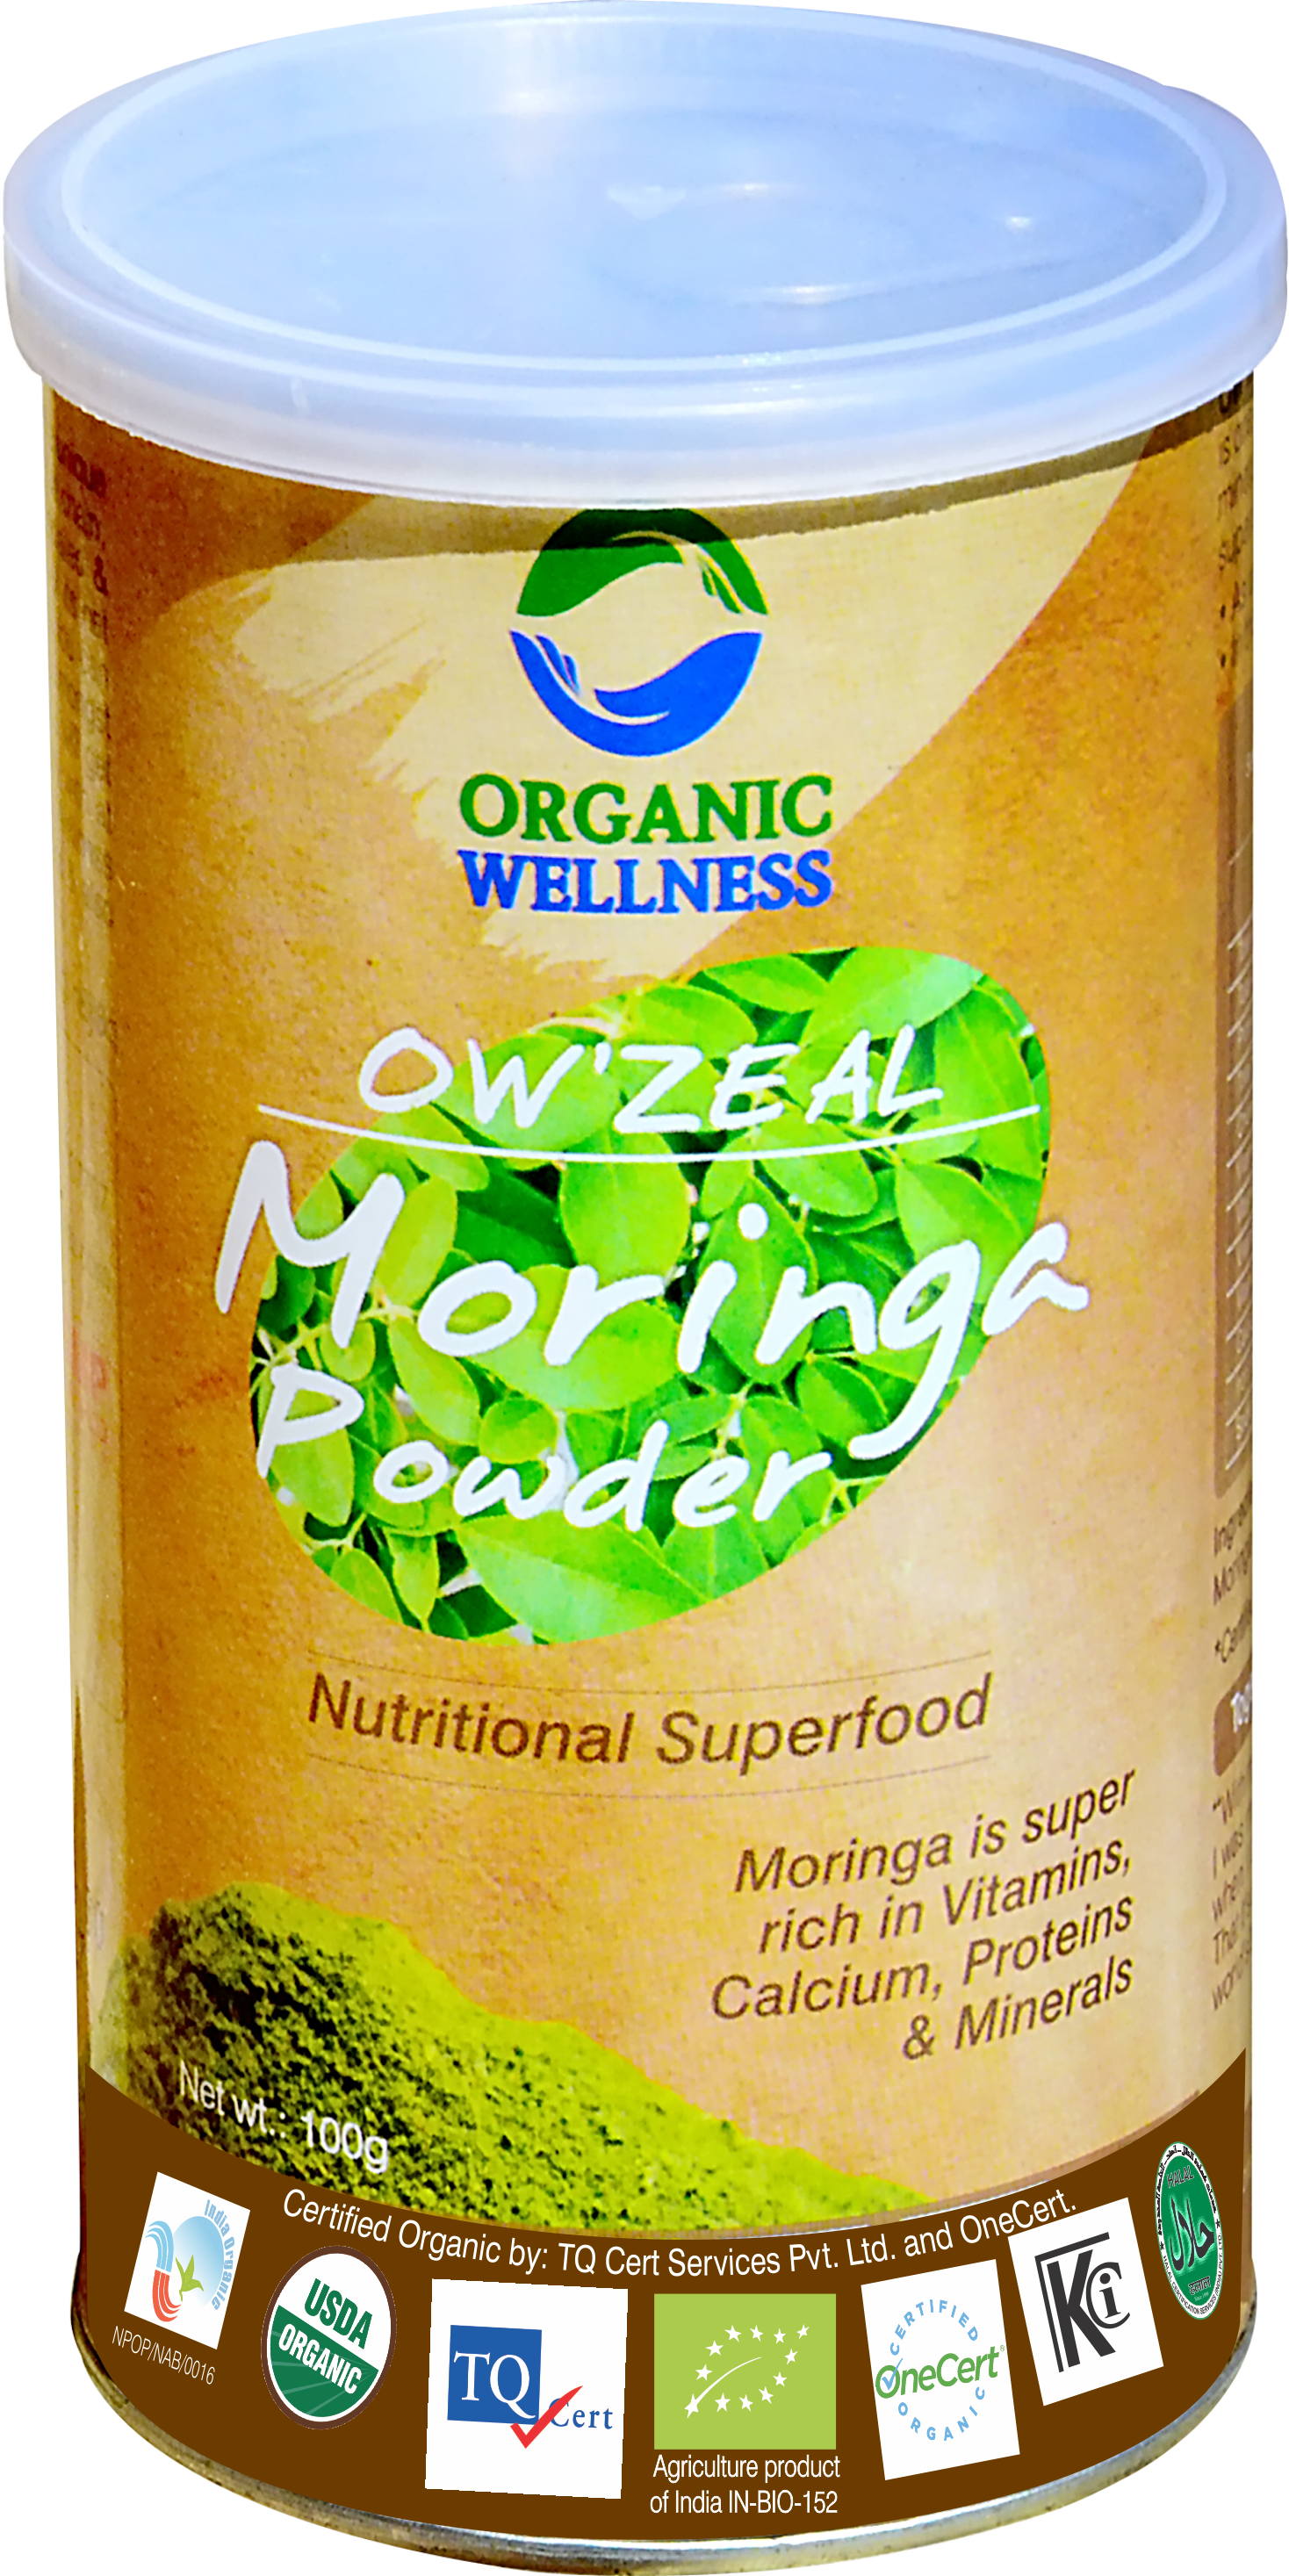 Buy Organic Wellness Zeal Moringa Powder at Best Price Online